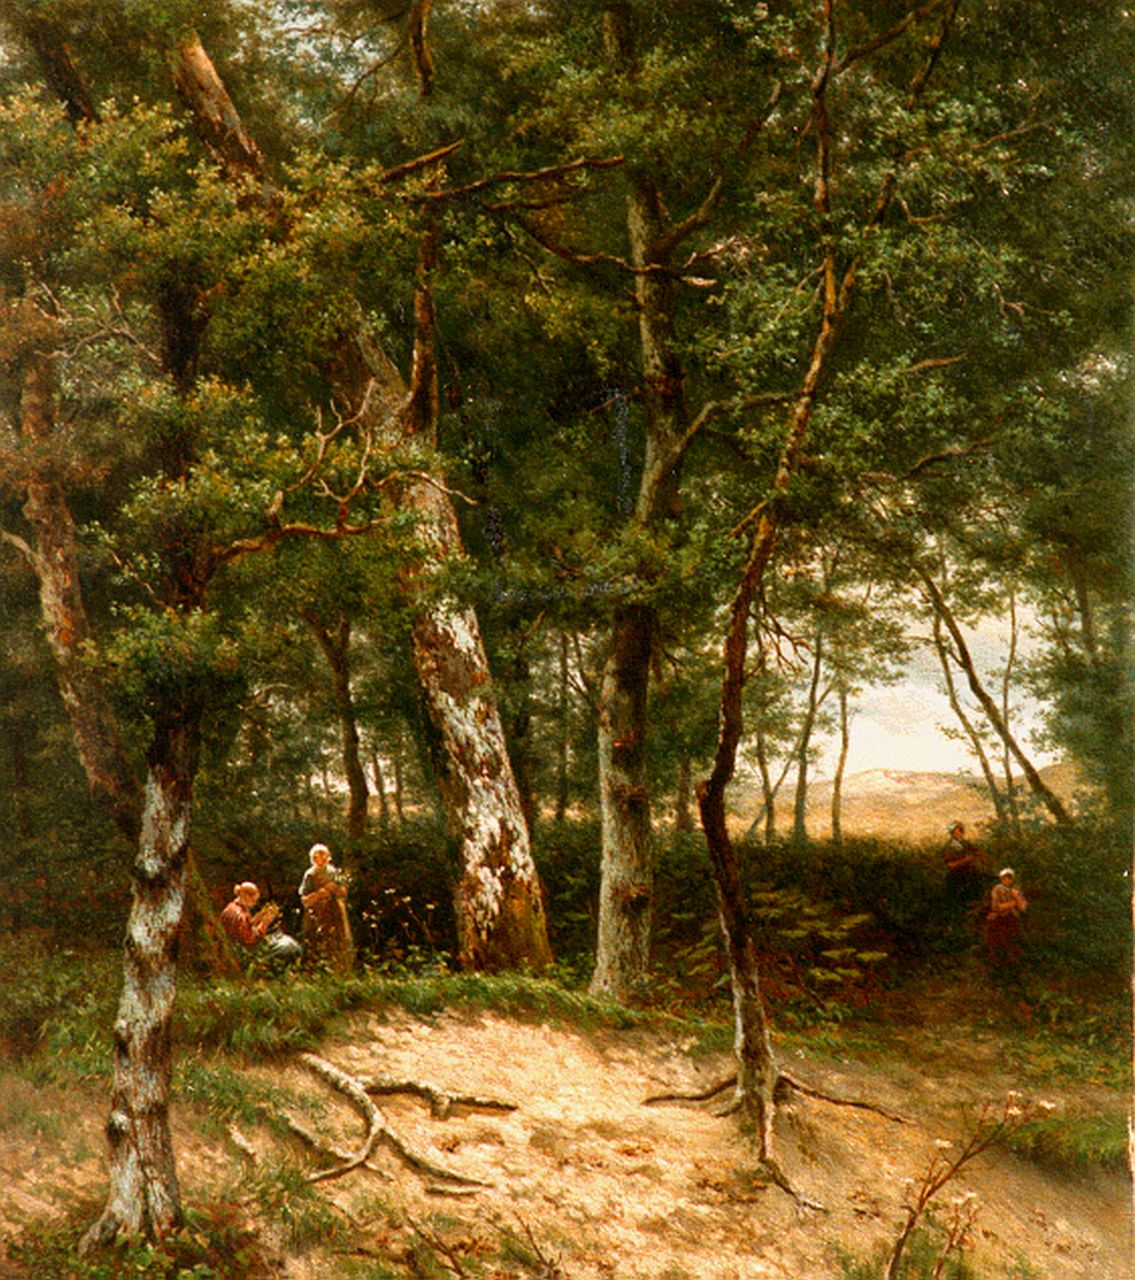 Pieterse G.  | Gijsbertus Pieterse, Bloemenpluksters in het bos, olieverf op doek 58,0 x 70,0 cm, gesigneerd rechtsonder